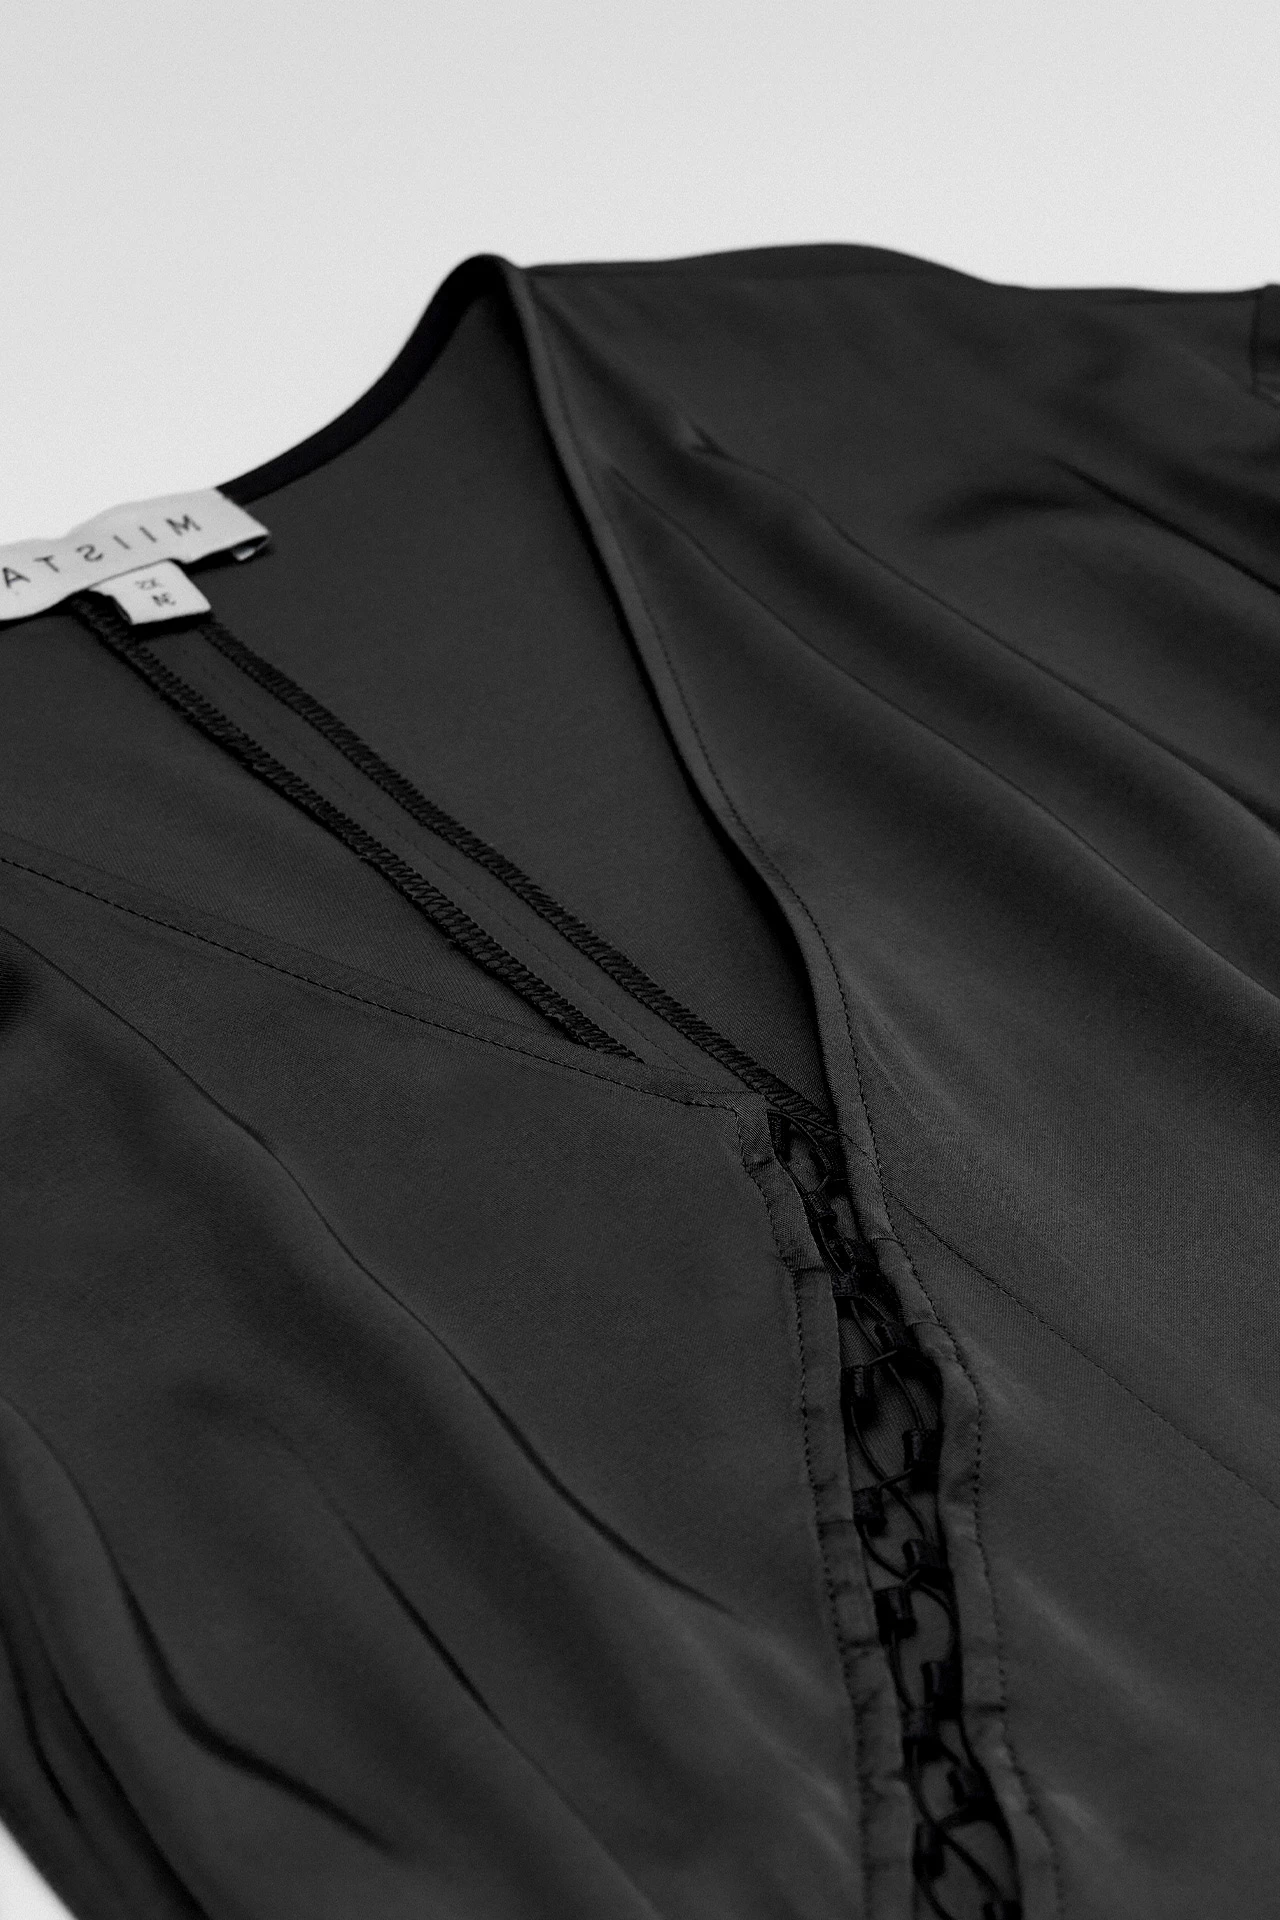 Miista-bruna-black-dress-03